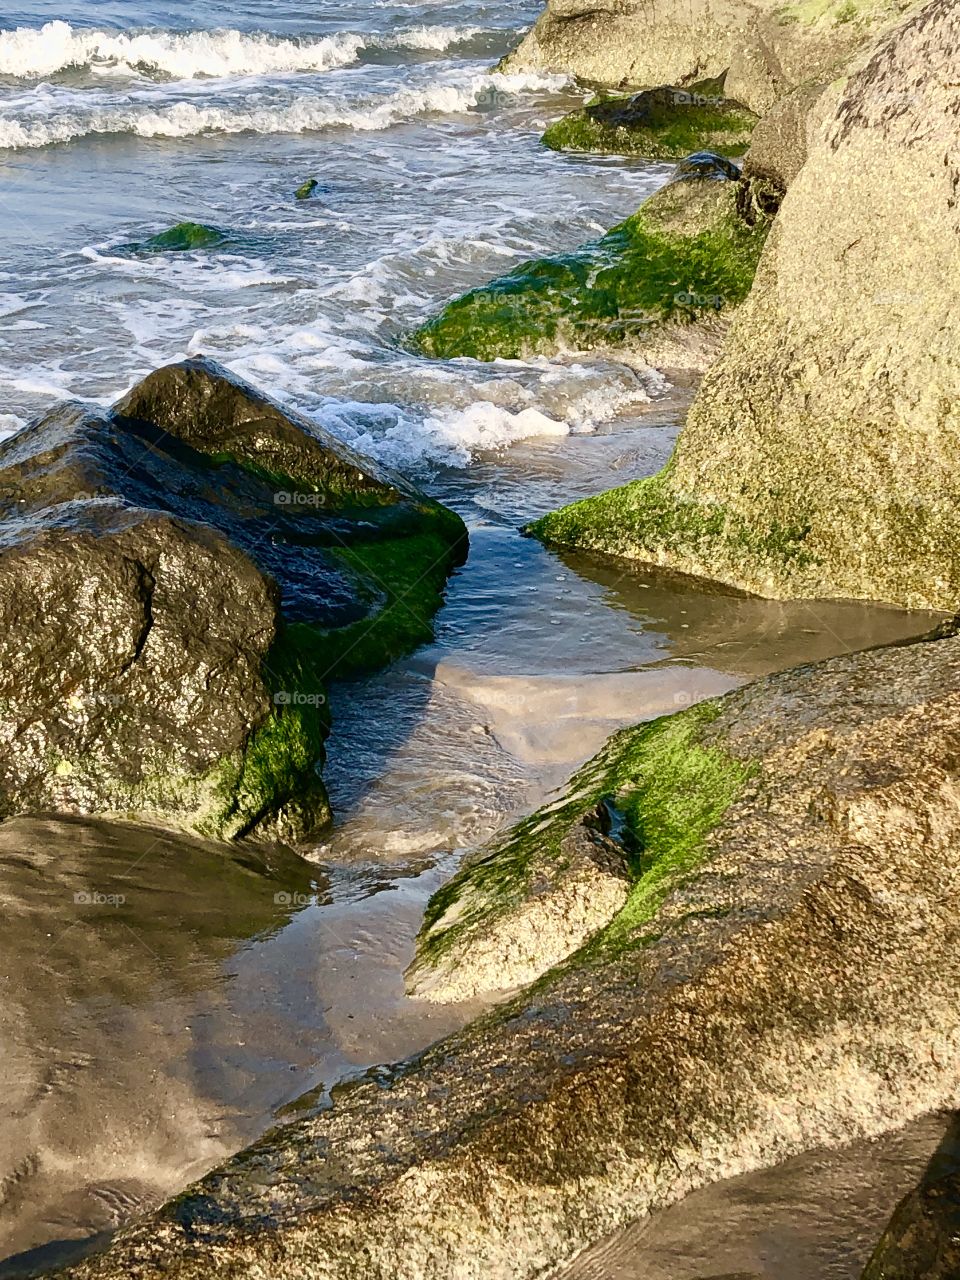 Rocks on the shore